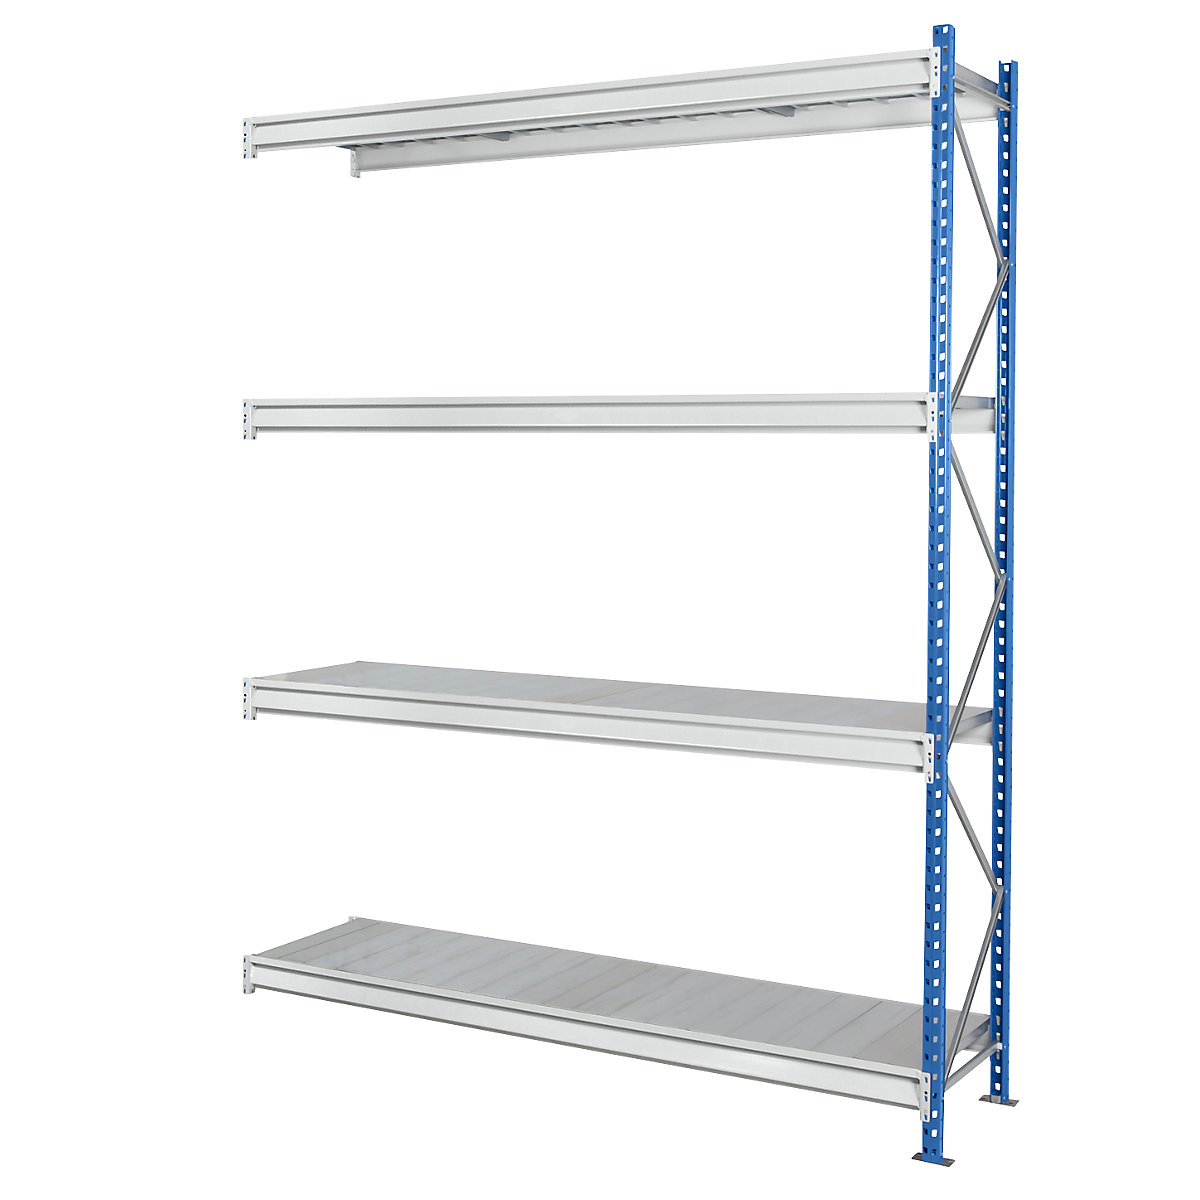 Heavy duty wide span shelving with steel shelf panels, frame colour blue, HxWxD 2996 x 2330 x 1000 mm, extension shelf unit-7